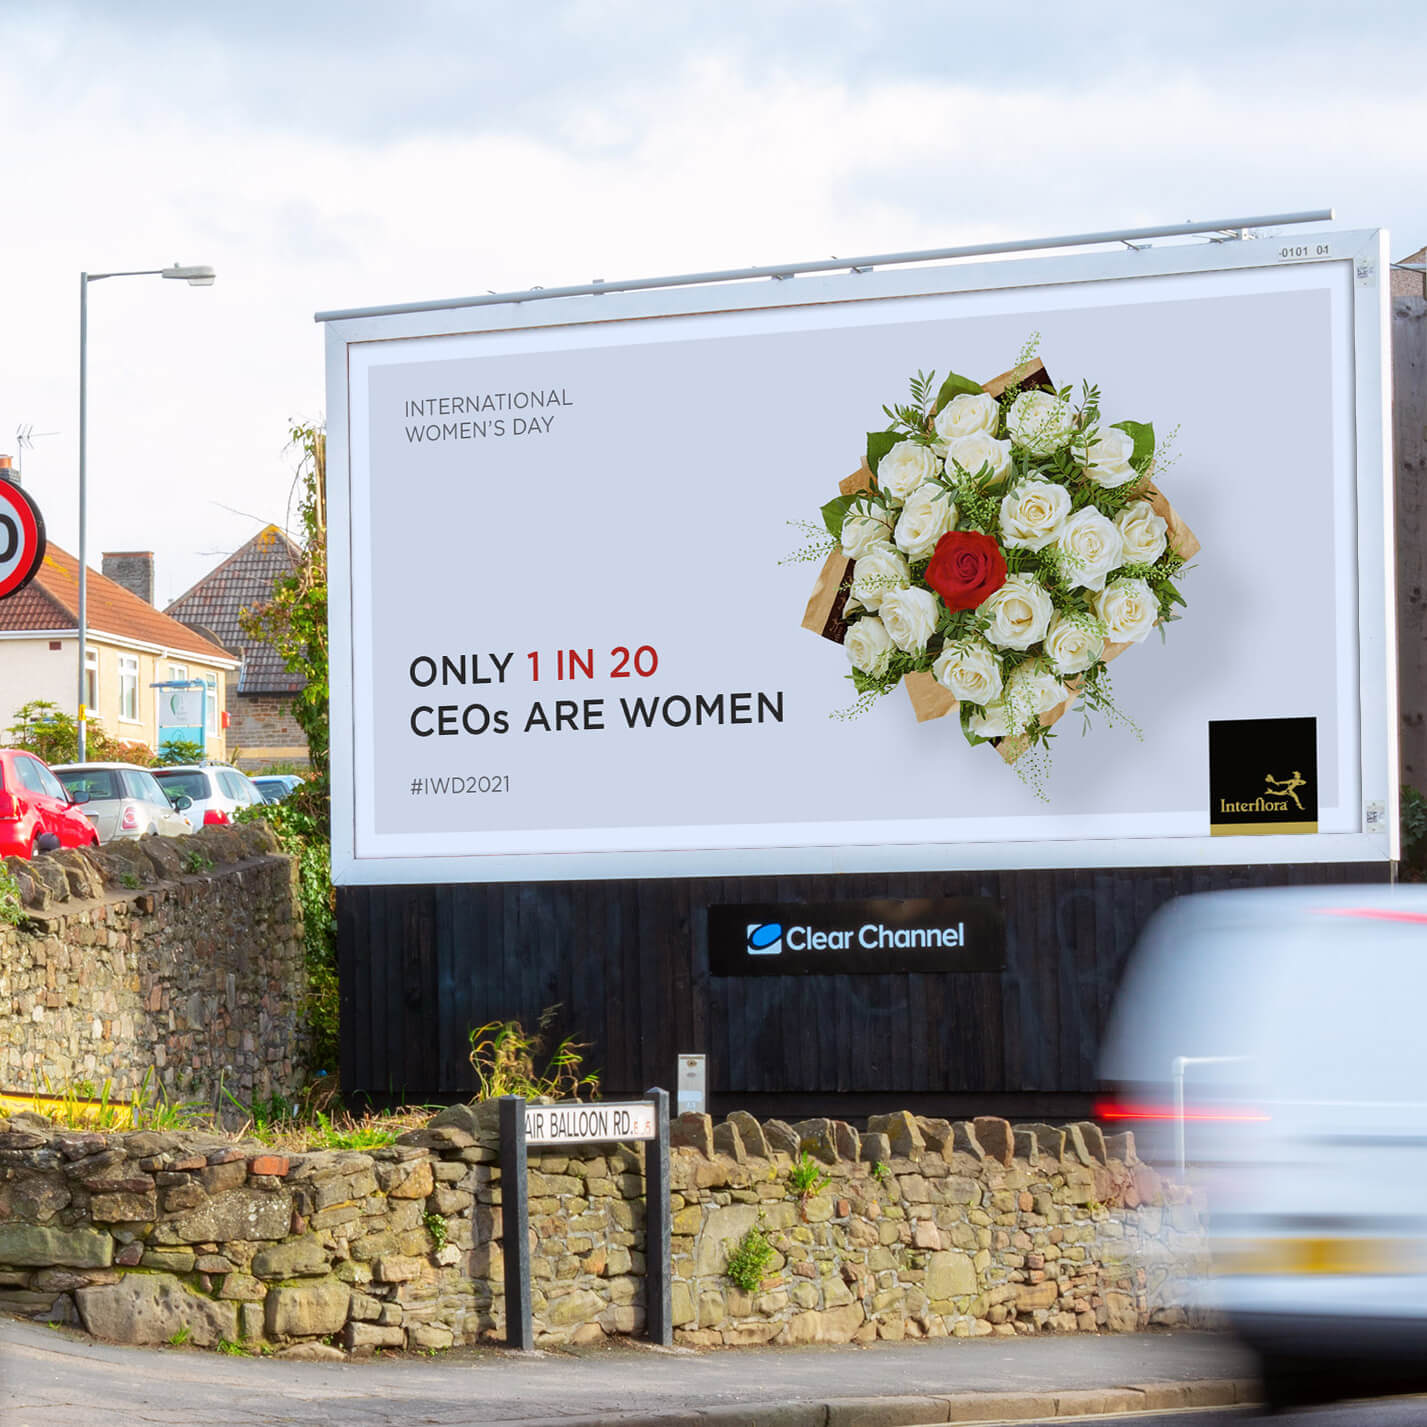 amy-jones-leeds-design-interflora-international-womens-day-2021-billboard-2